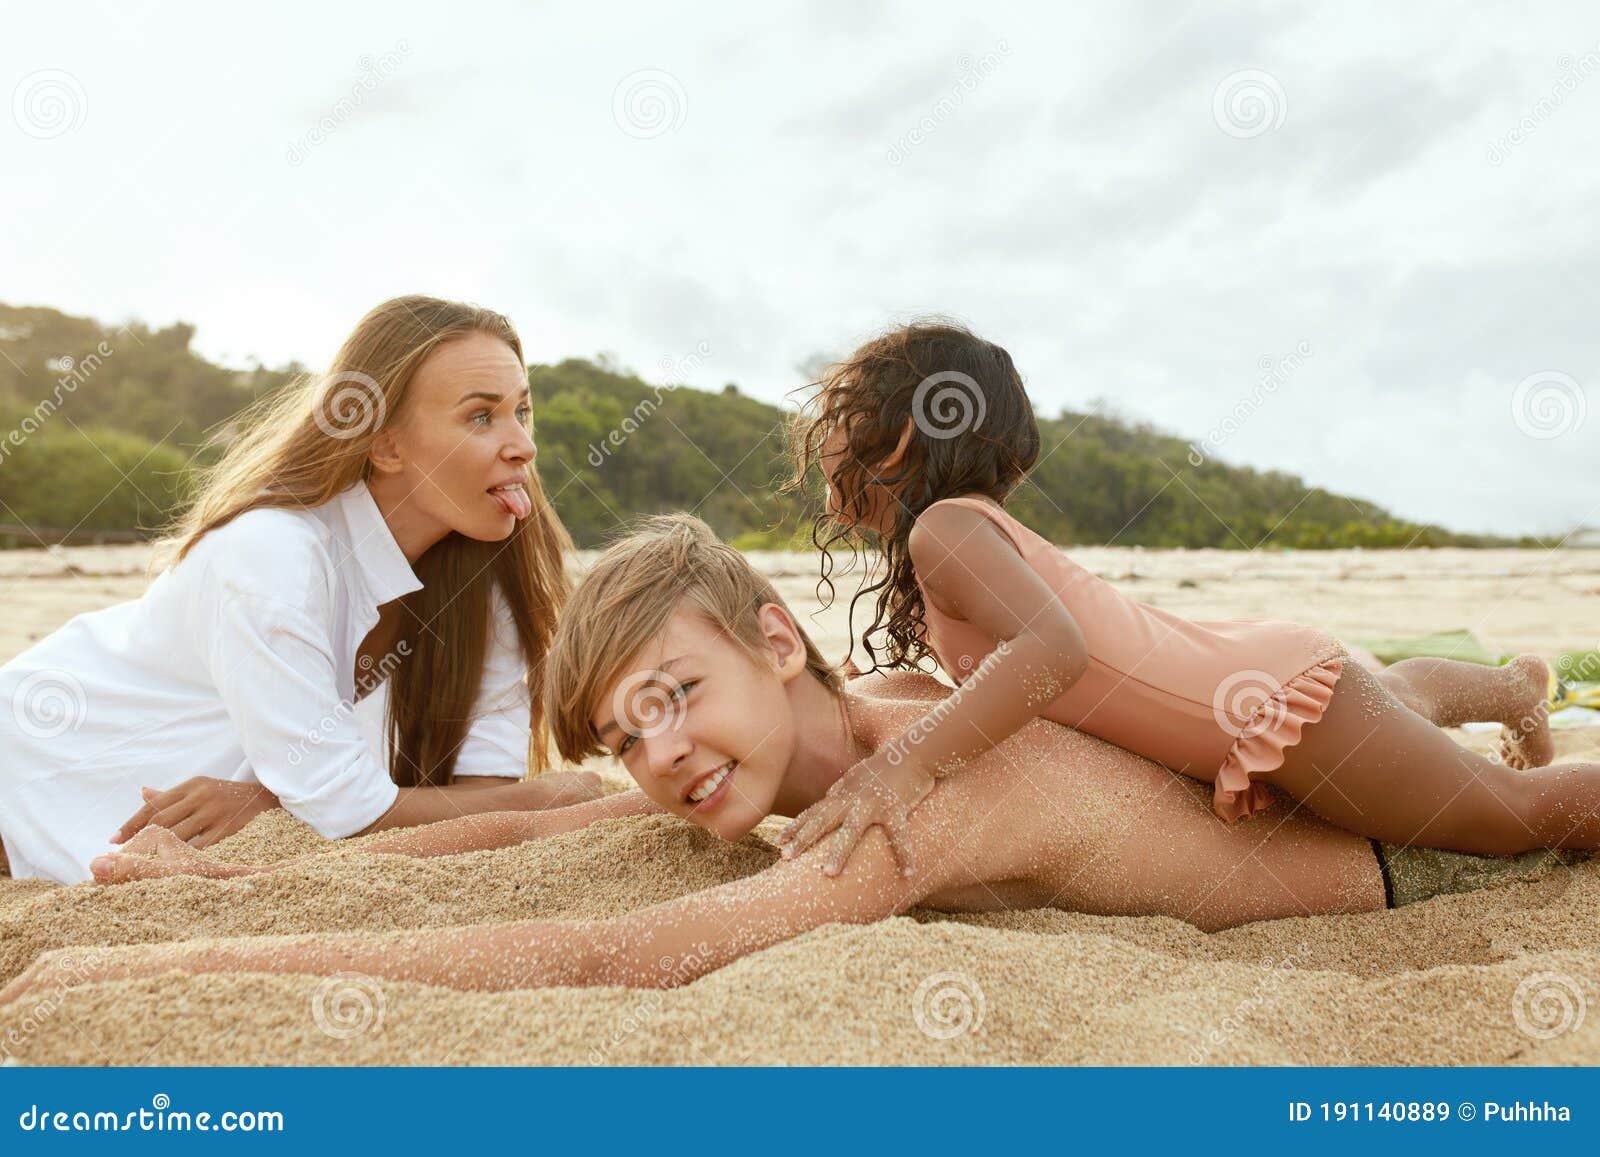 Best of Nude beach family fun